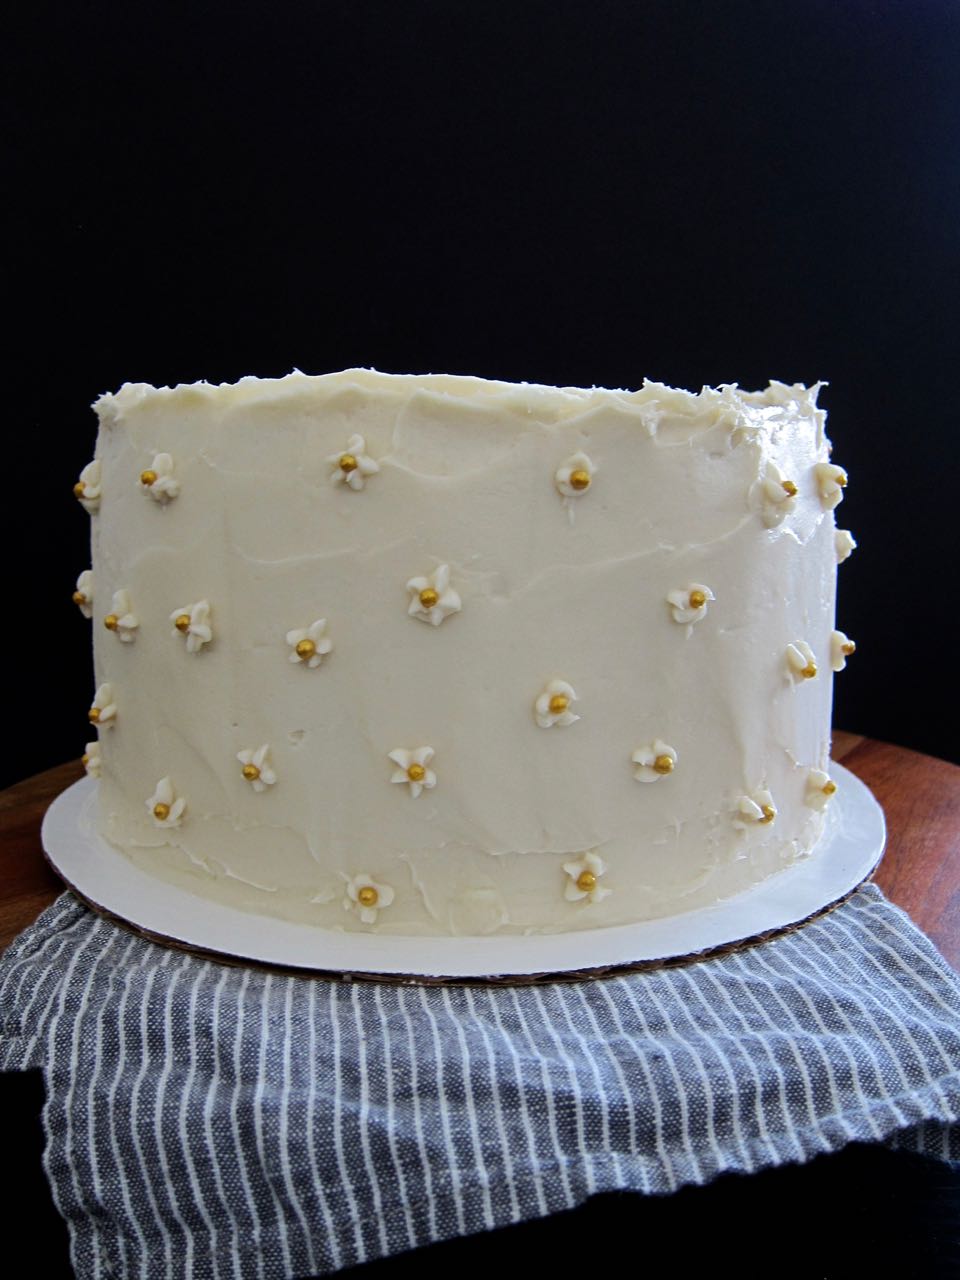 cream cheese frosting on cake.jpg